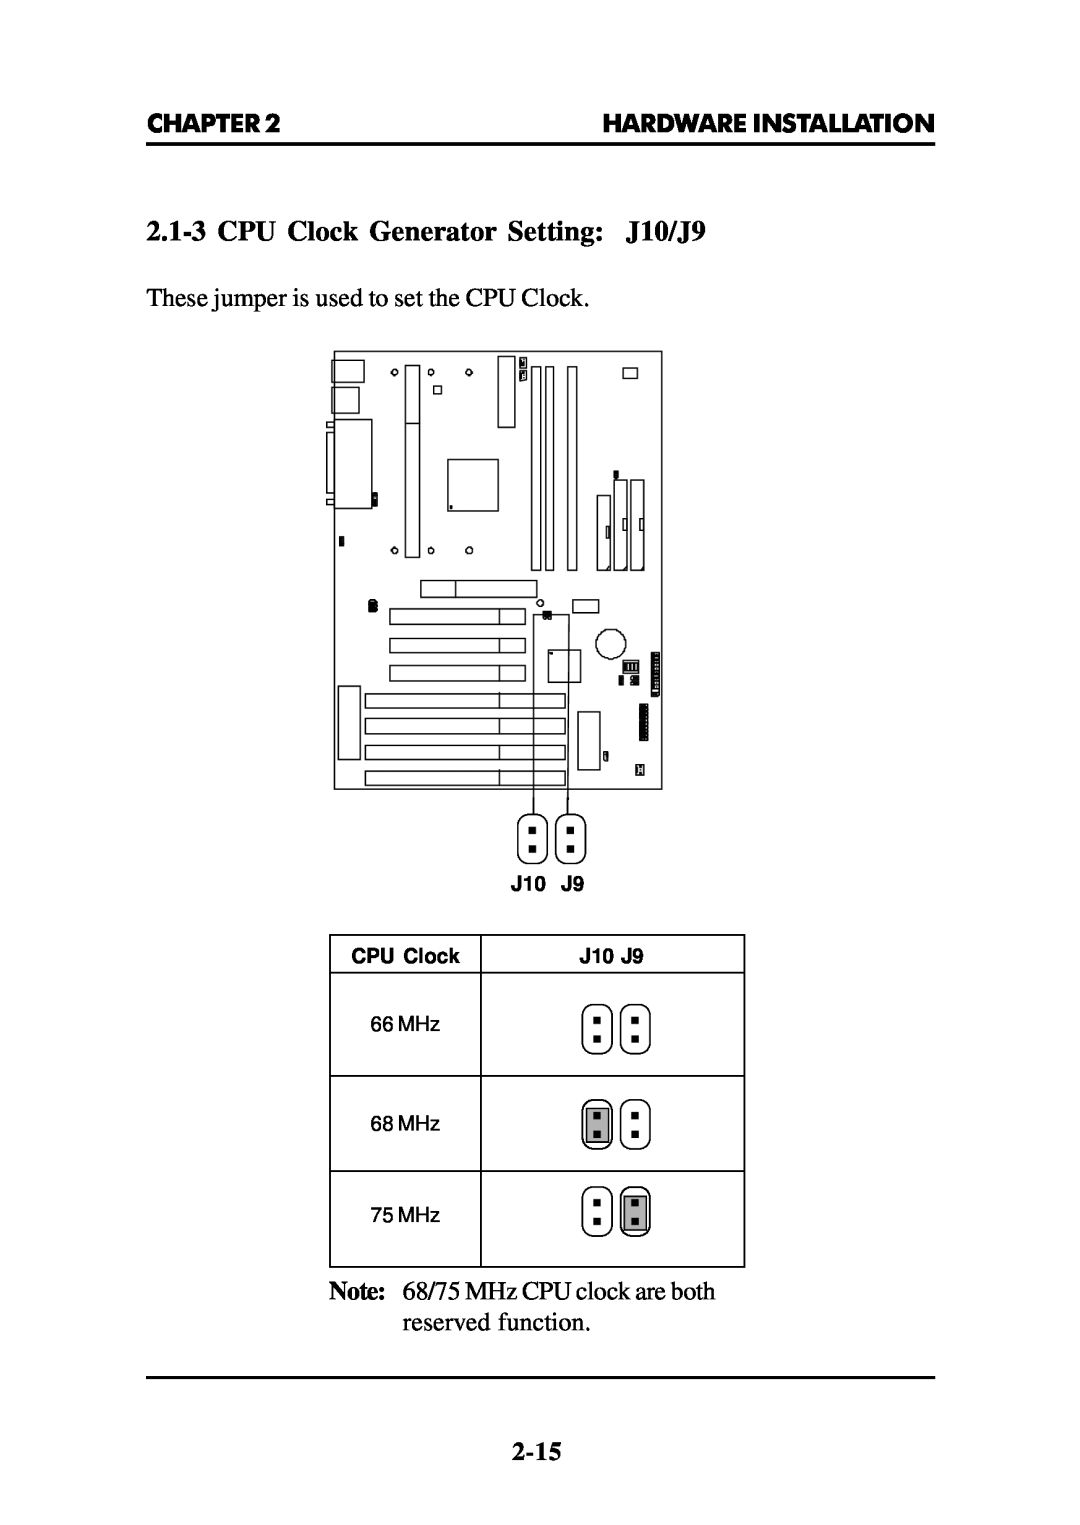 Intel MS-6112 manual 2.1-3CPU Clock Generator Setting J10/J9, Chapter, Hardware Installation 